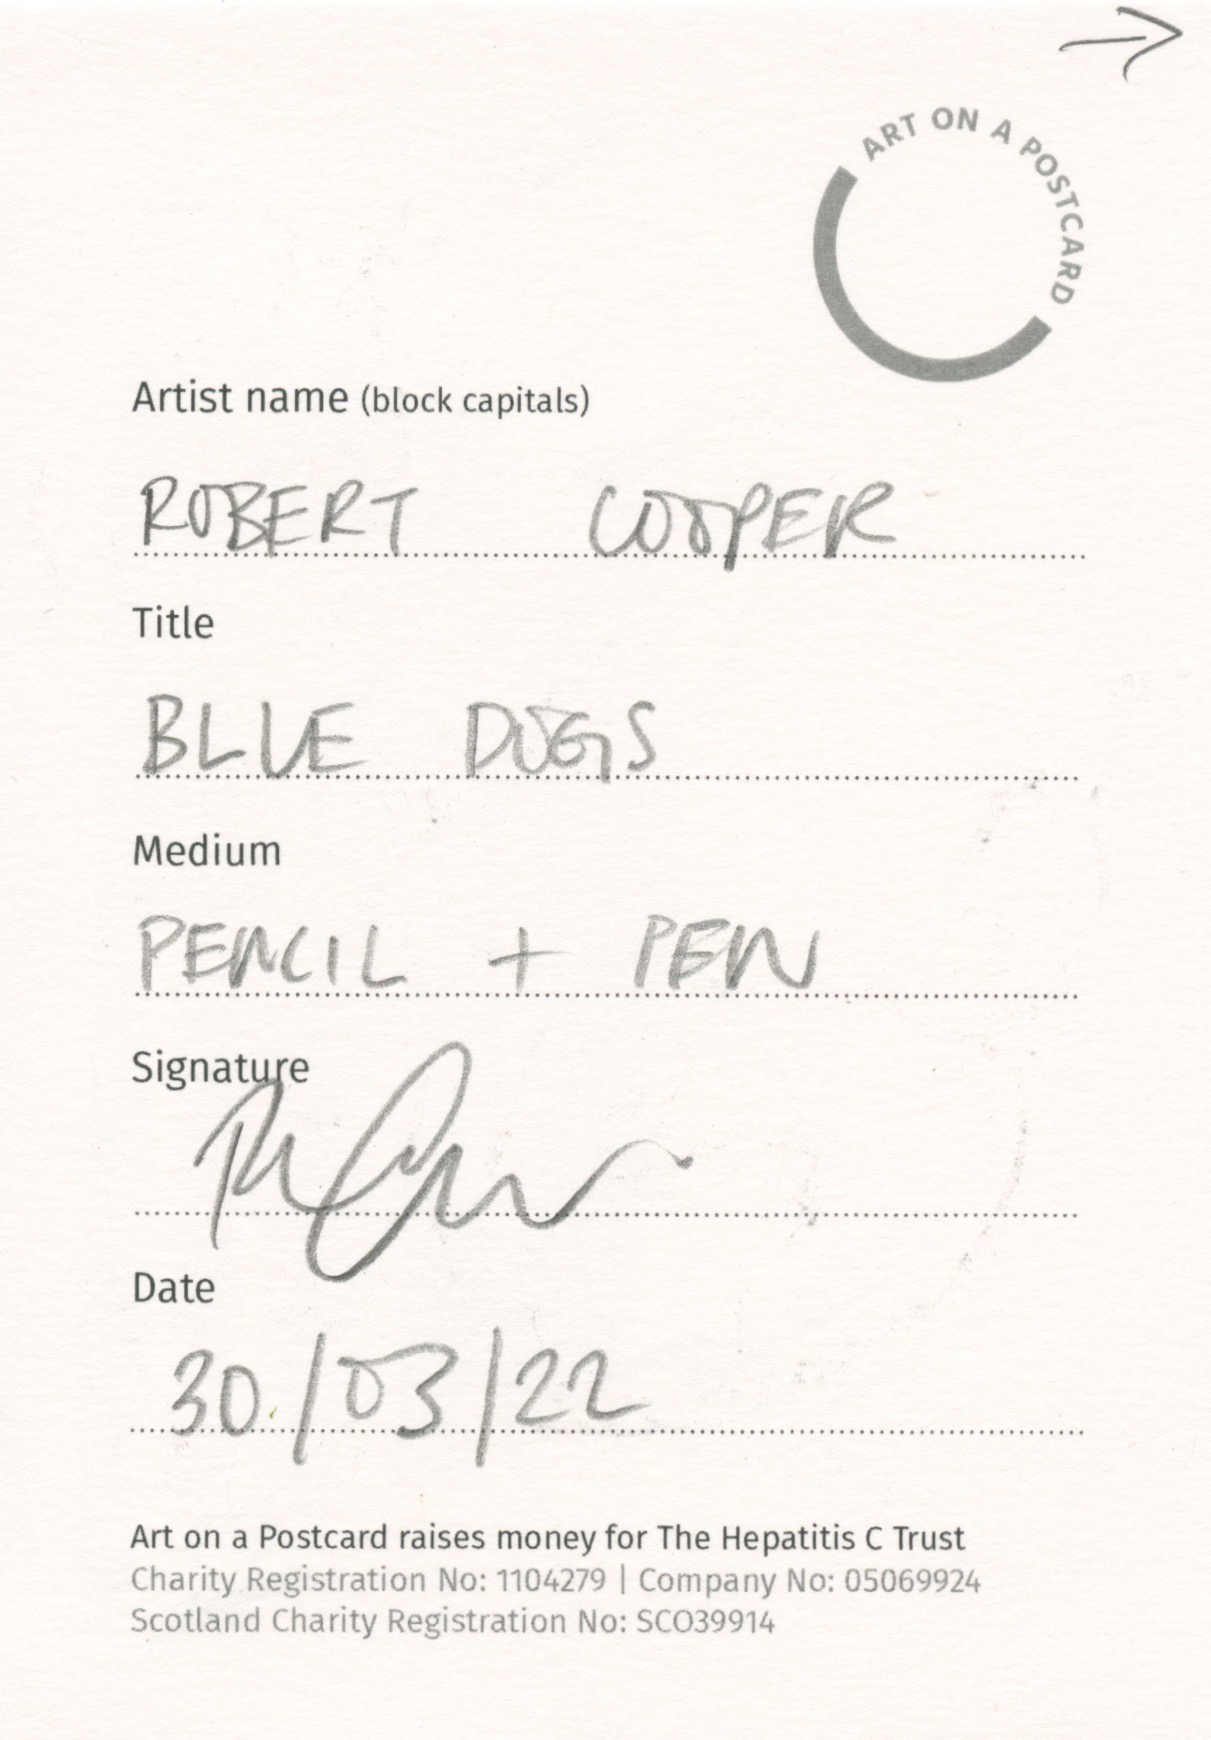 79. Robert Cooper - Blue Dogs - BACK